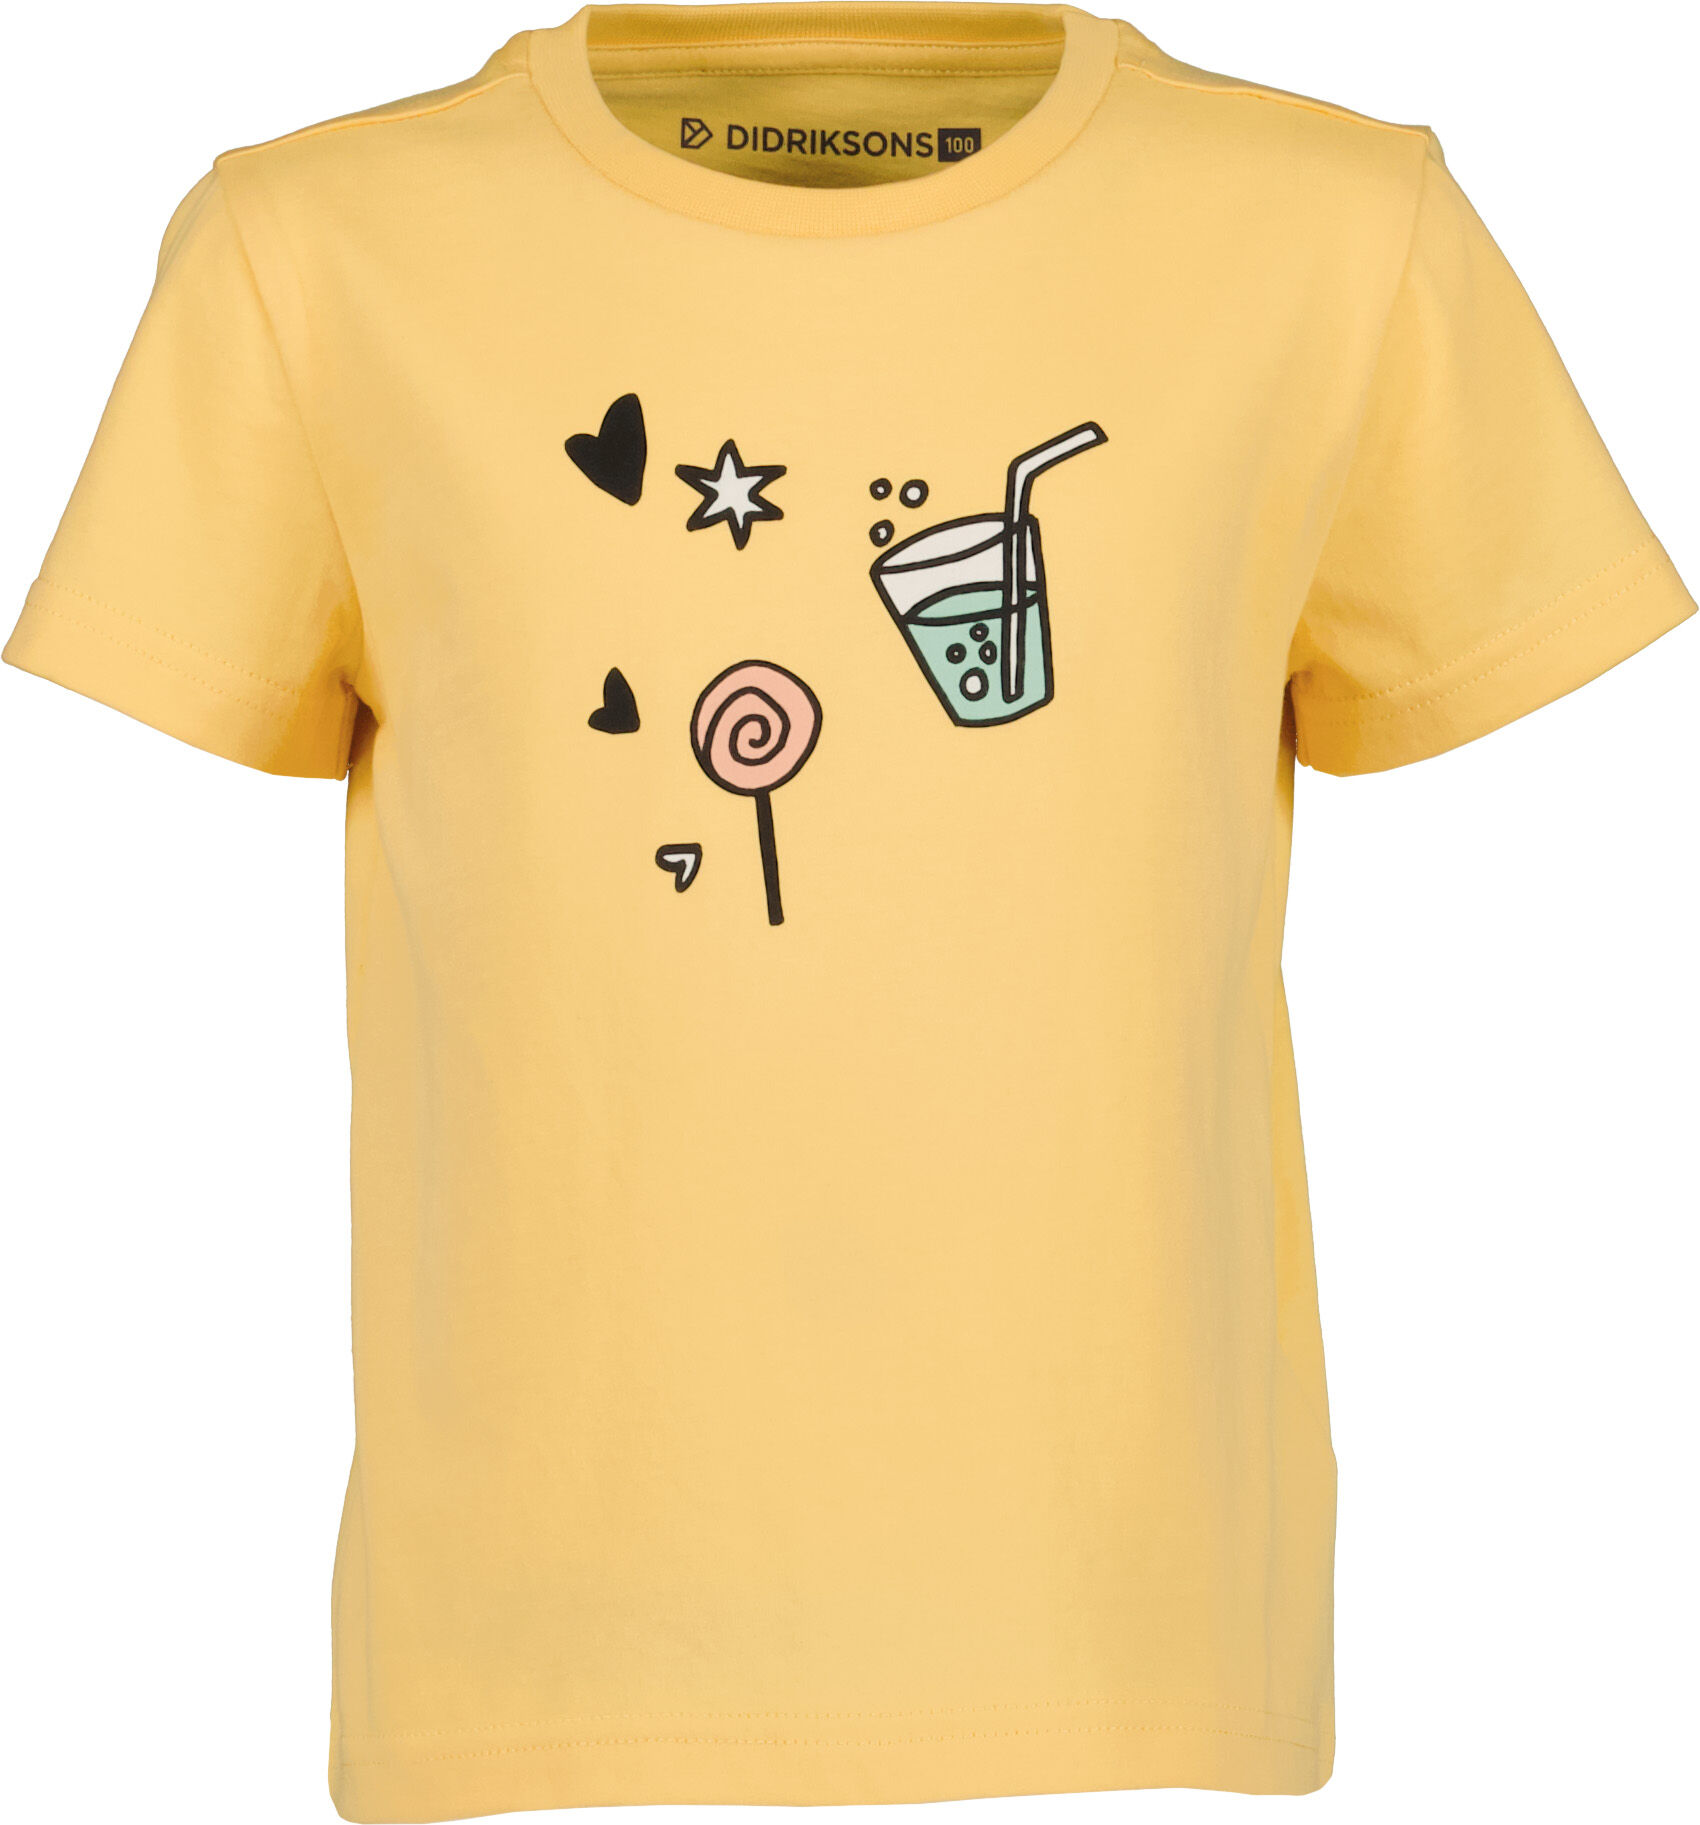 Didriksons Mynta T-shirt Creamy Yellow 110